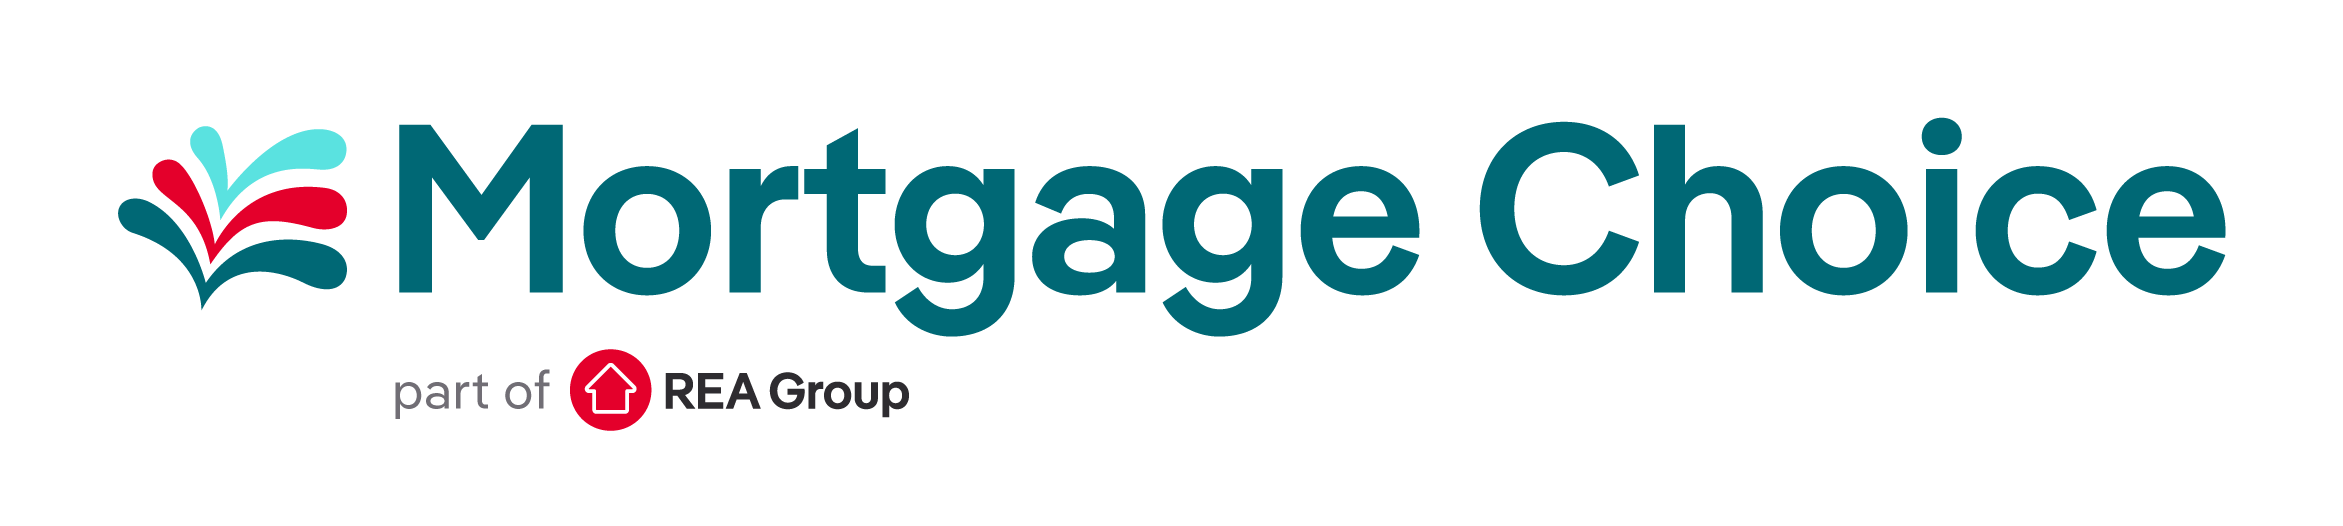 mortgagechoice-logo-rgb-h-REA-300dpi